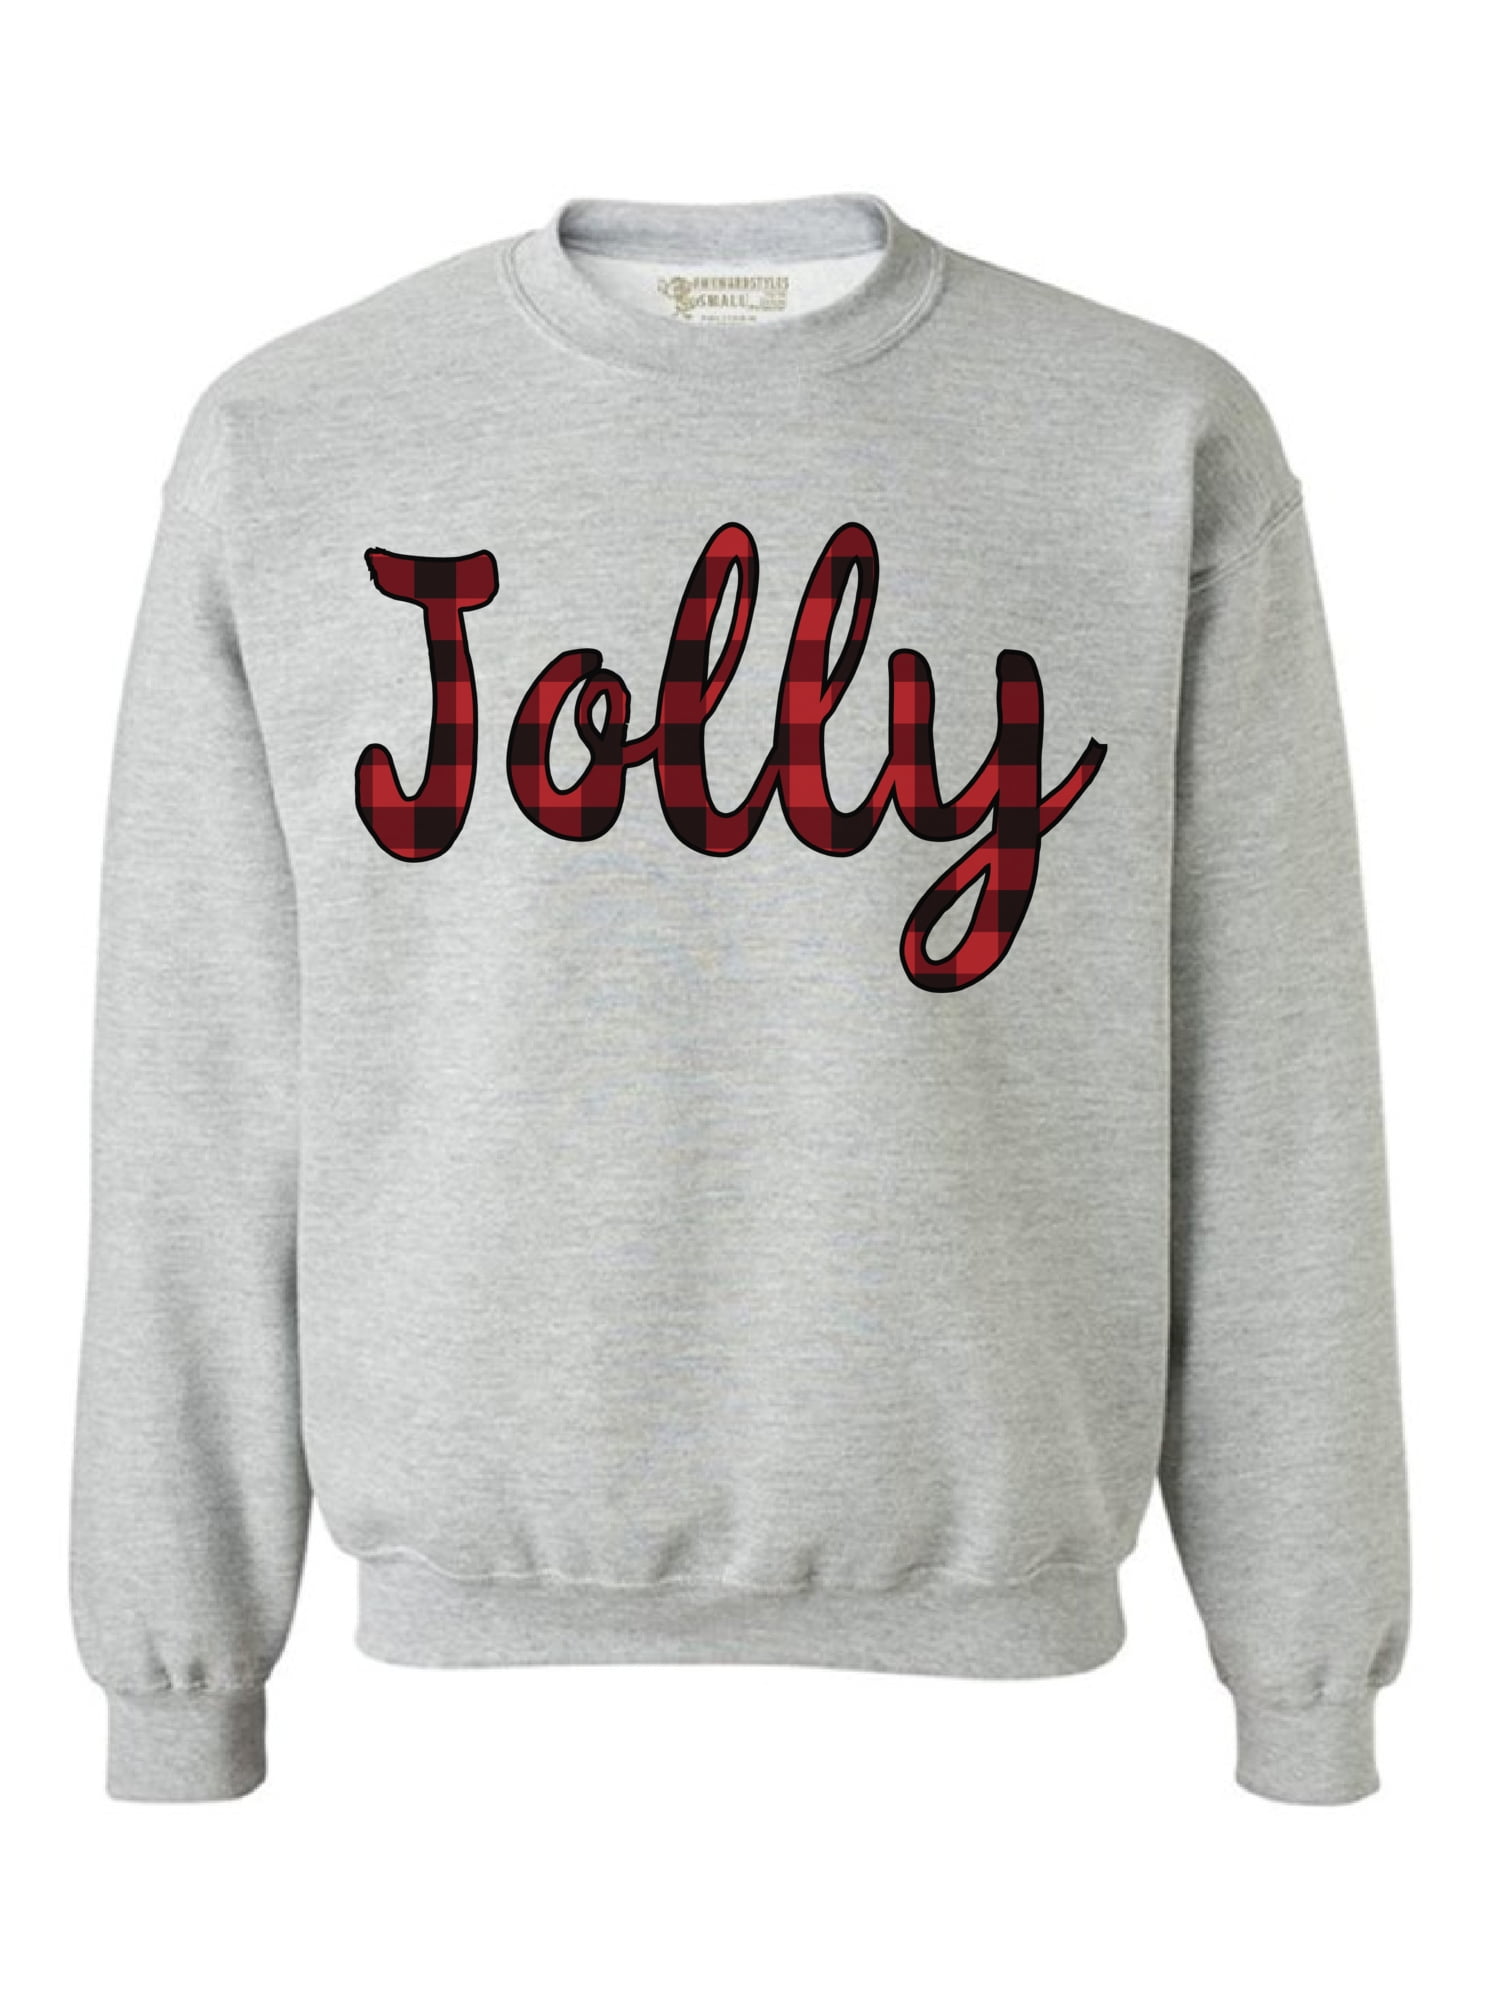 Jolly Holiday Christmas Sweatshirt